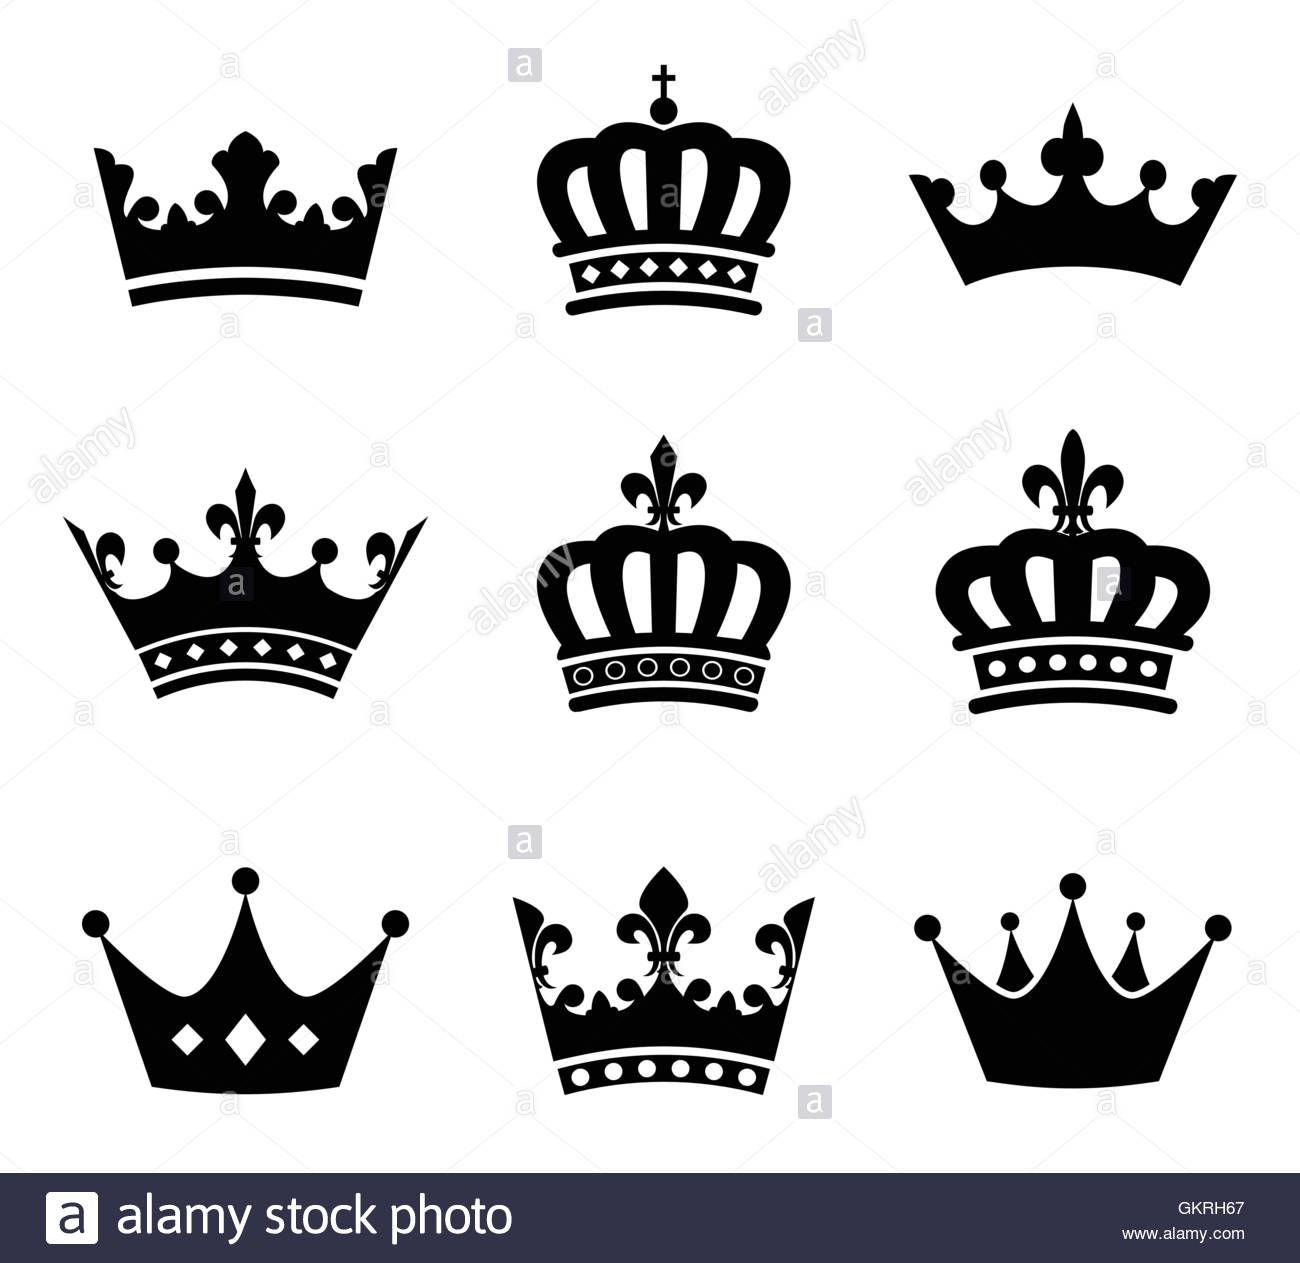 Queen Crown Logo - Free King Crown Logo Icon 336733 | Download King Crown Logo Icon ...